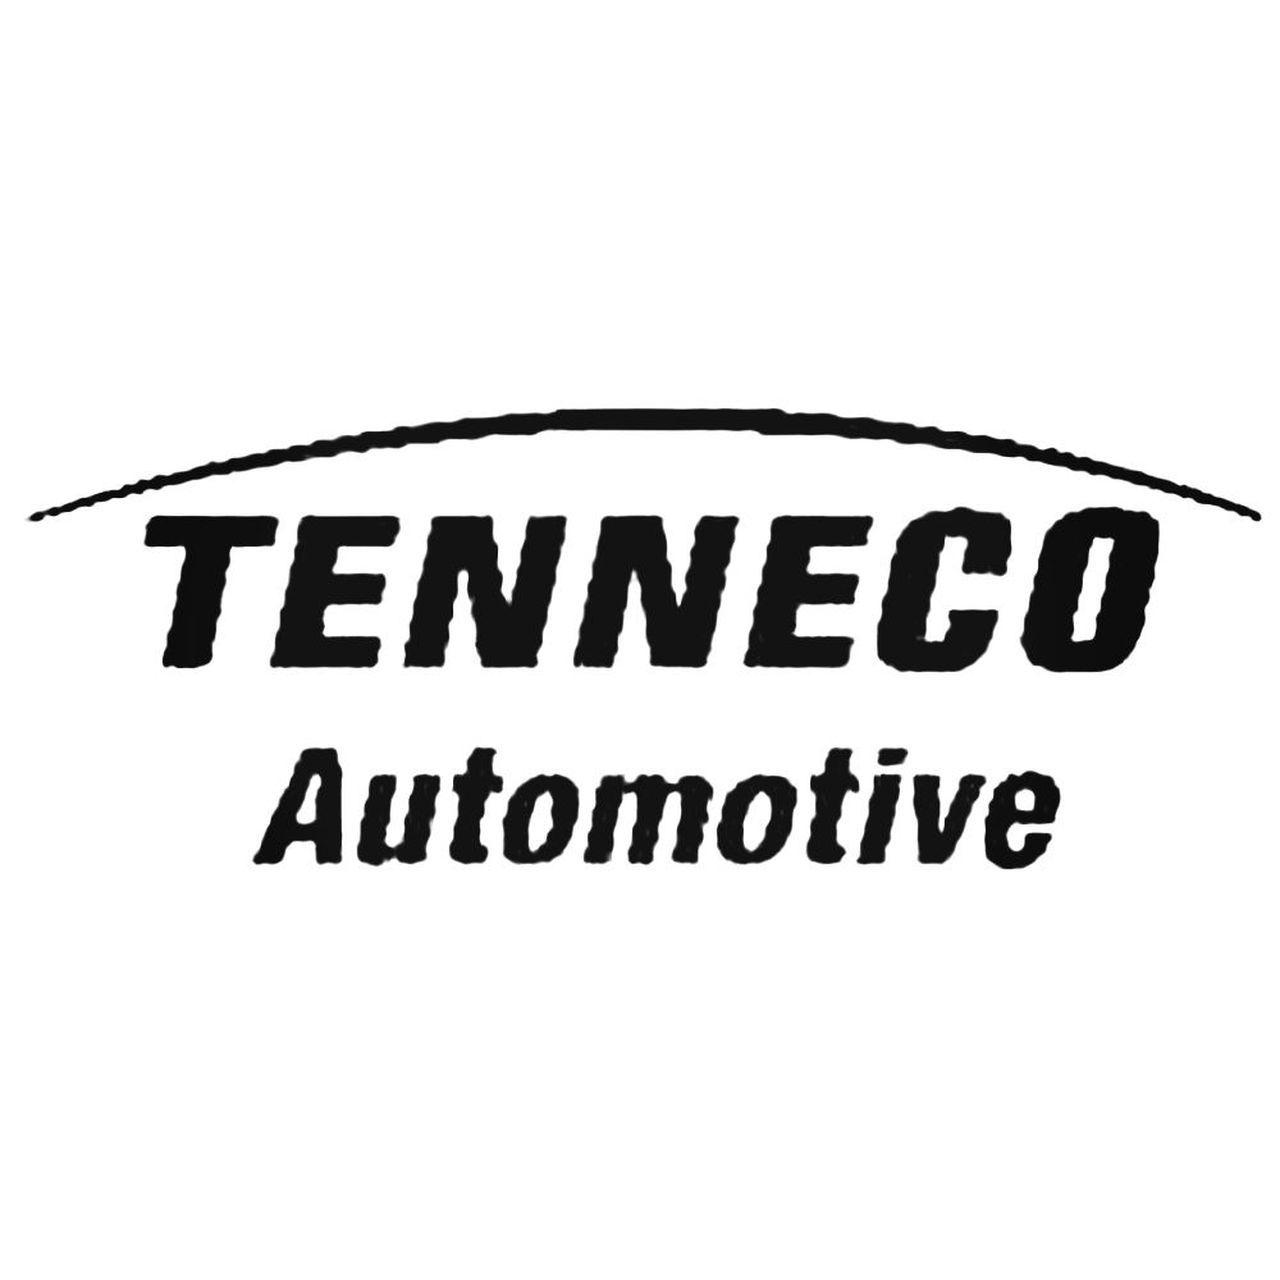 Tennco Logo - Tenneco Automotive Decal Sticker